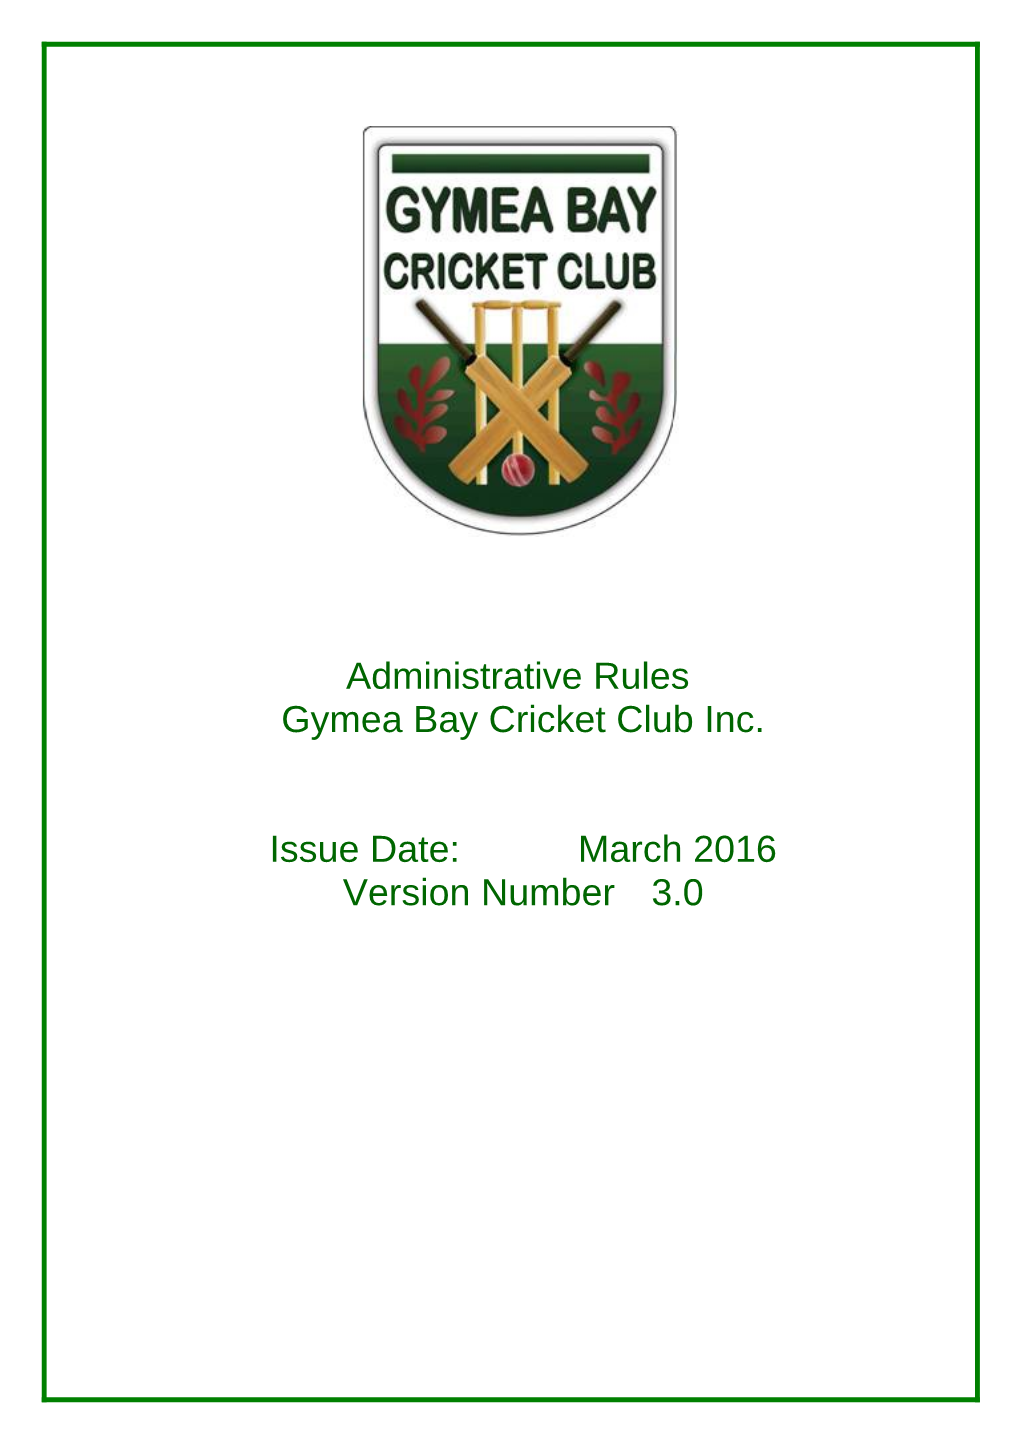 Administrative Rules of Gymea Bay Cricket Club Inc